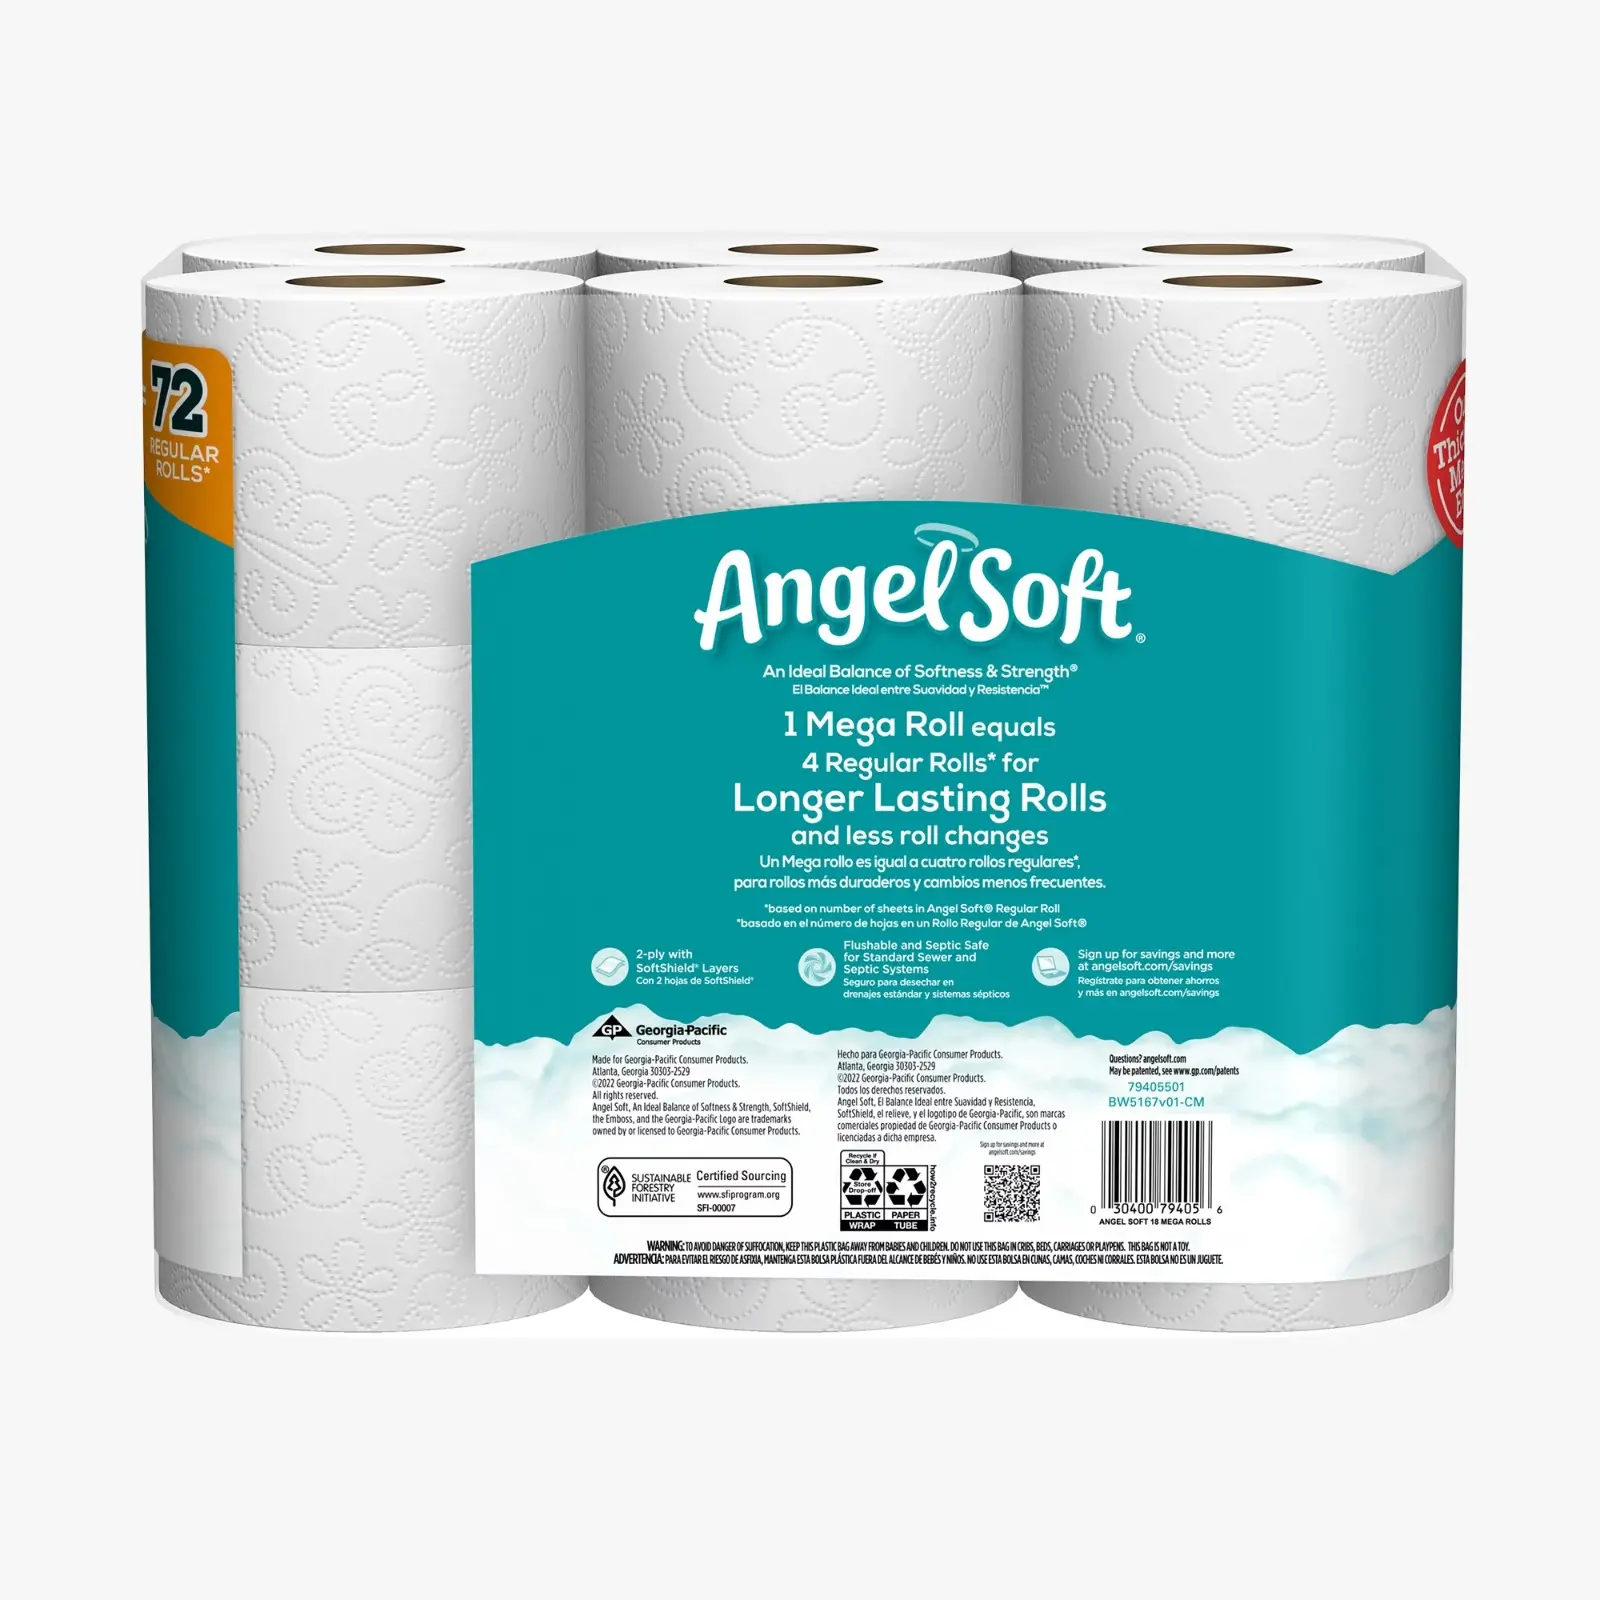 Мягкая туалетная бумага Angel, 18 Мега рулонов для продажи